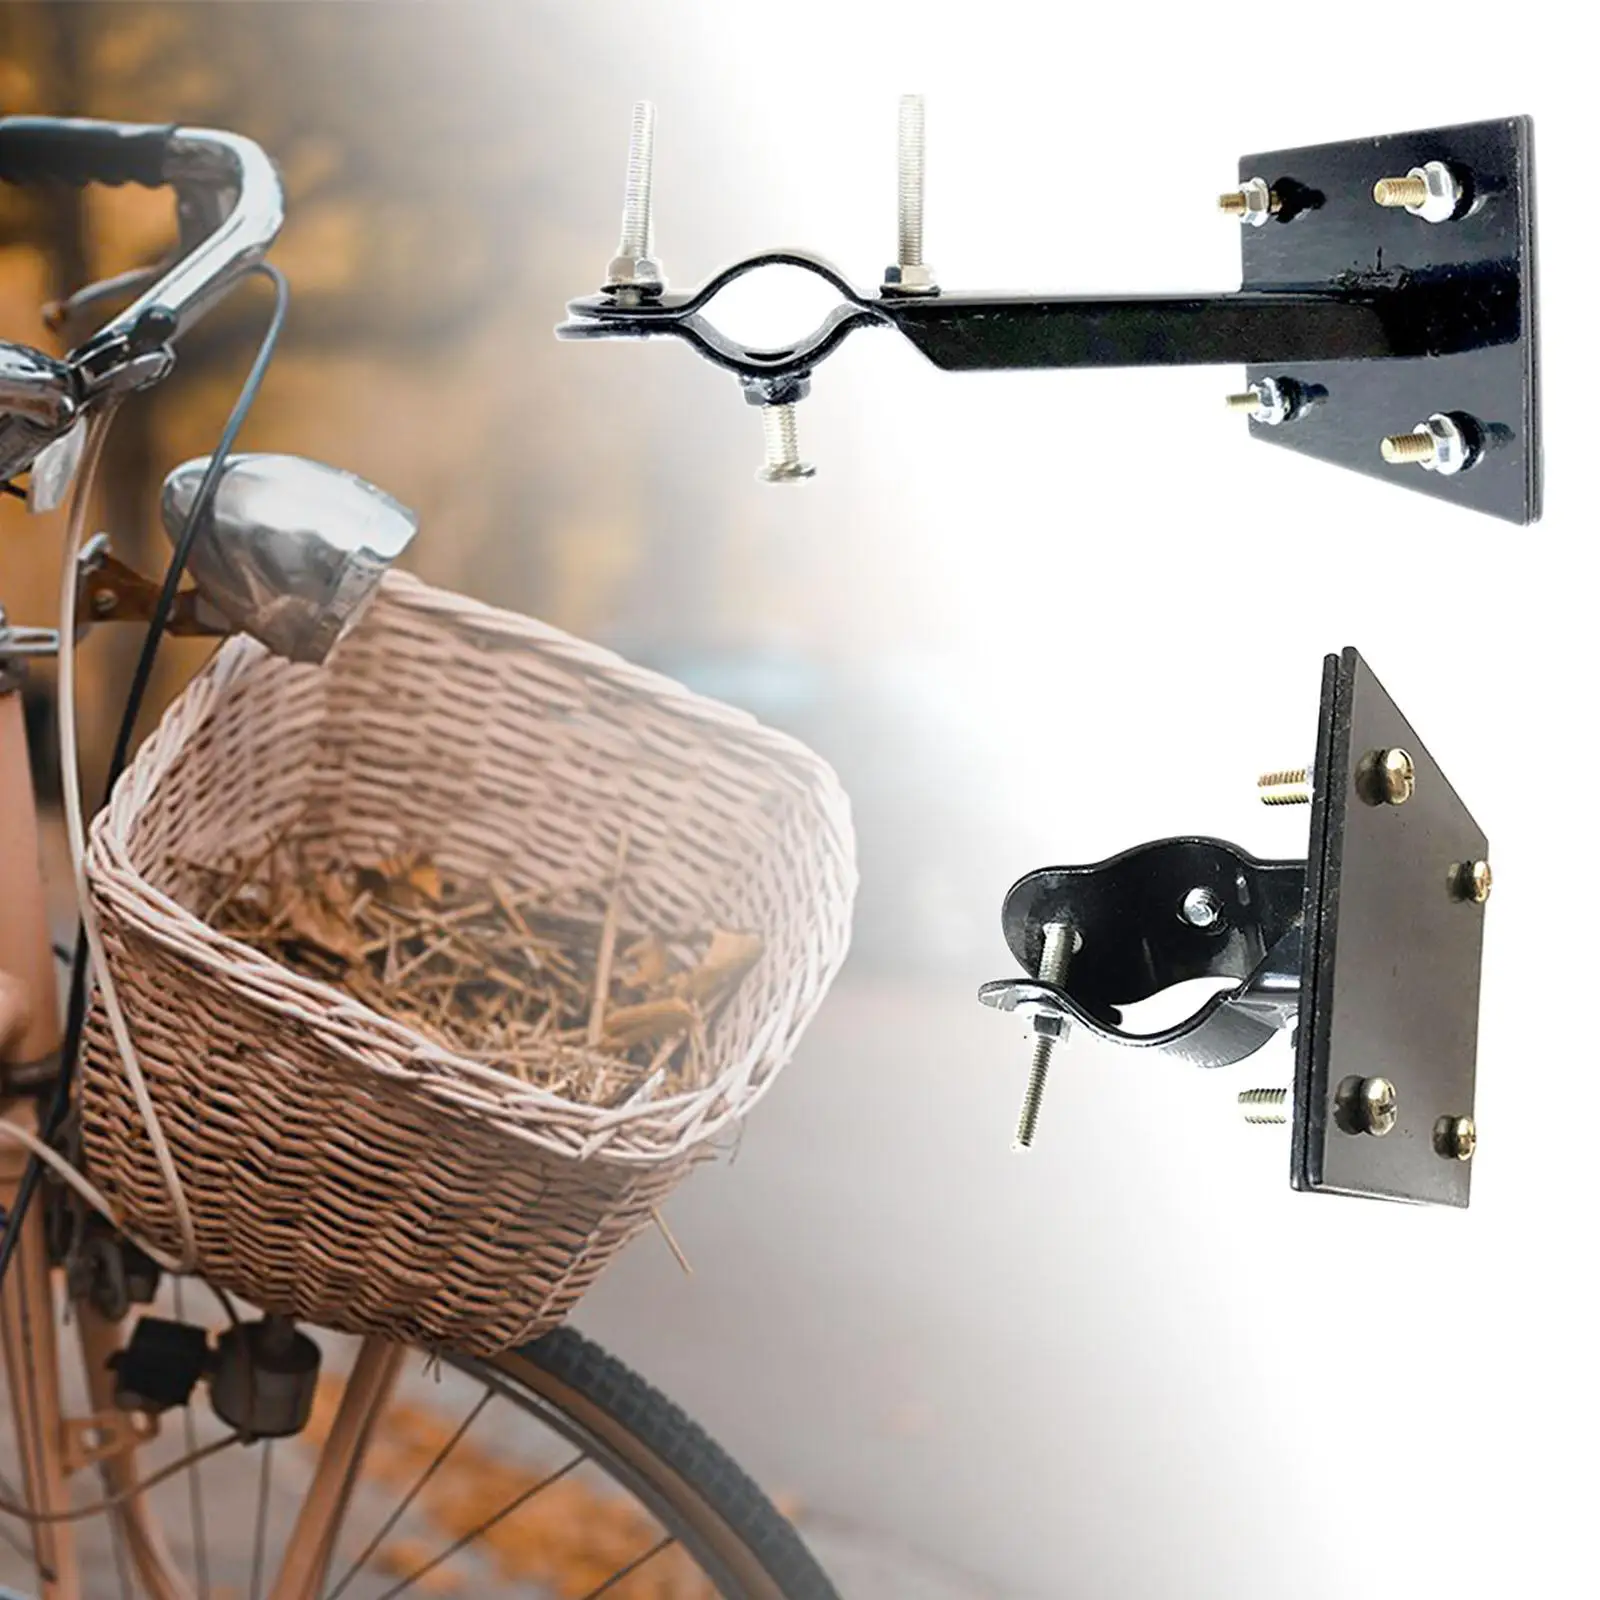 Bicycle Quick Release Bracket Front Hanging Frame Fixing Basket Mount for Cargo Rack, Road Bike